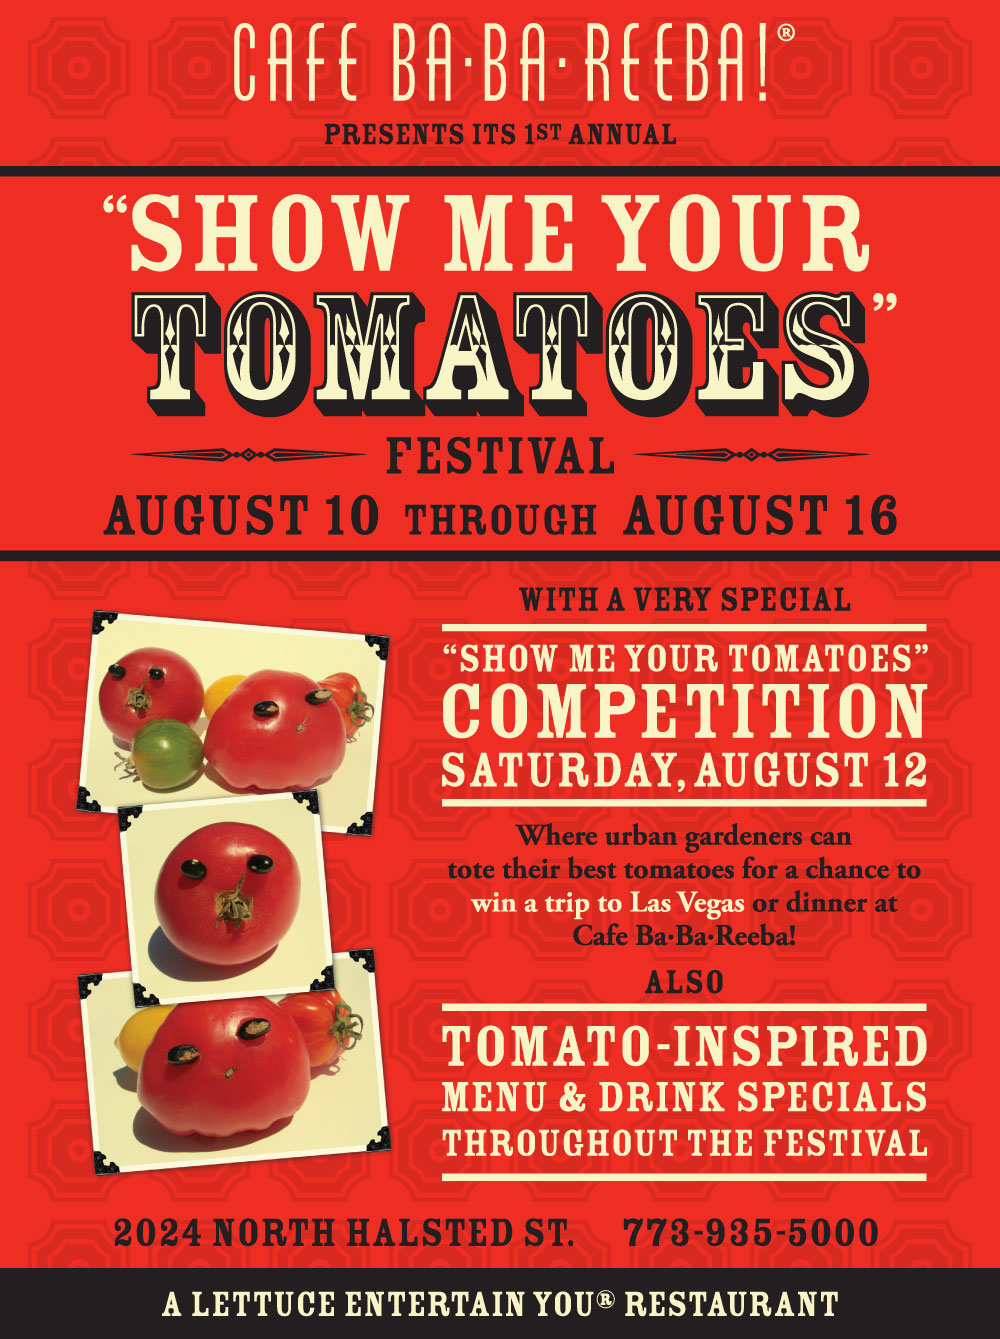 Show Me Your Tomatoes, Cafe Ba-Ba-Reeba!